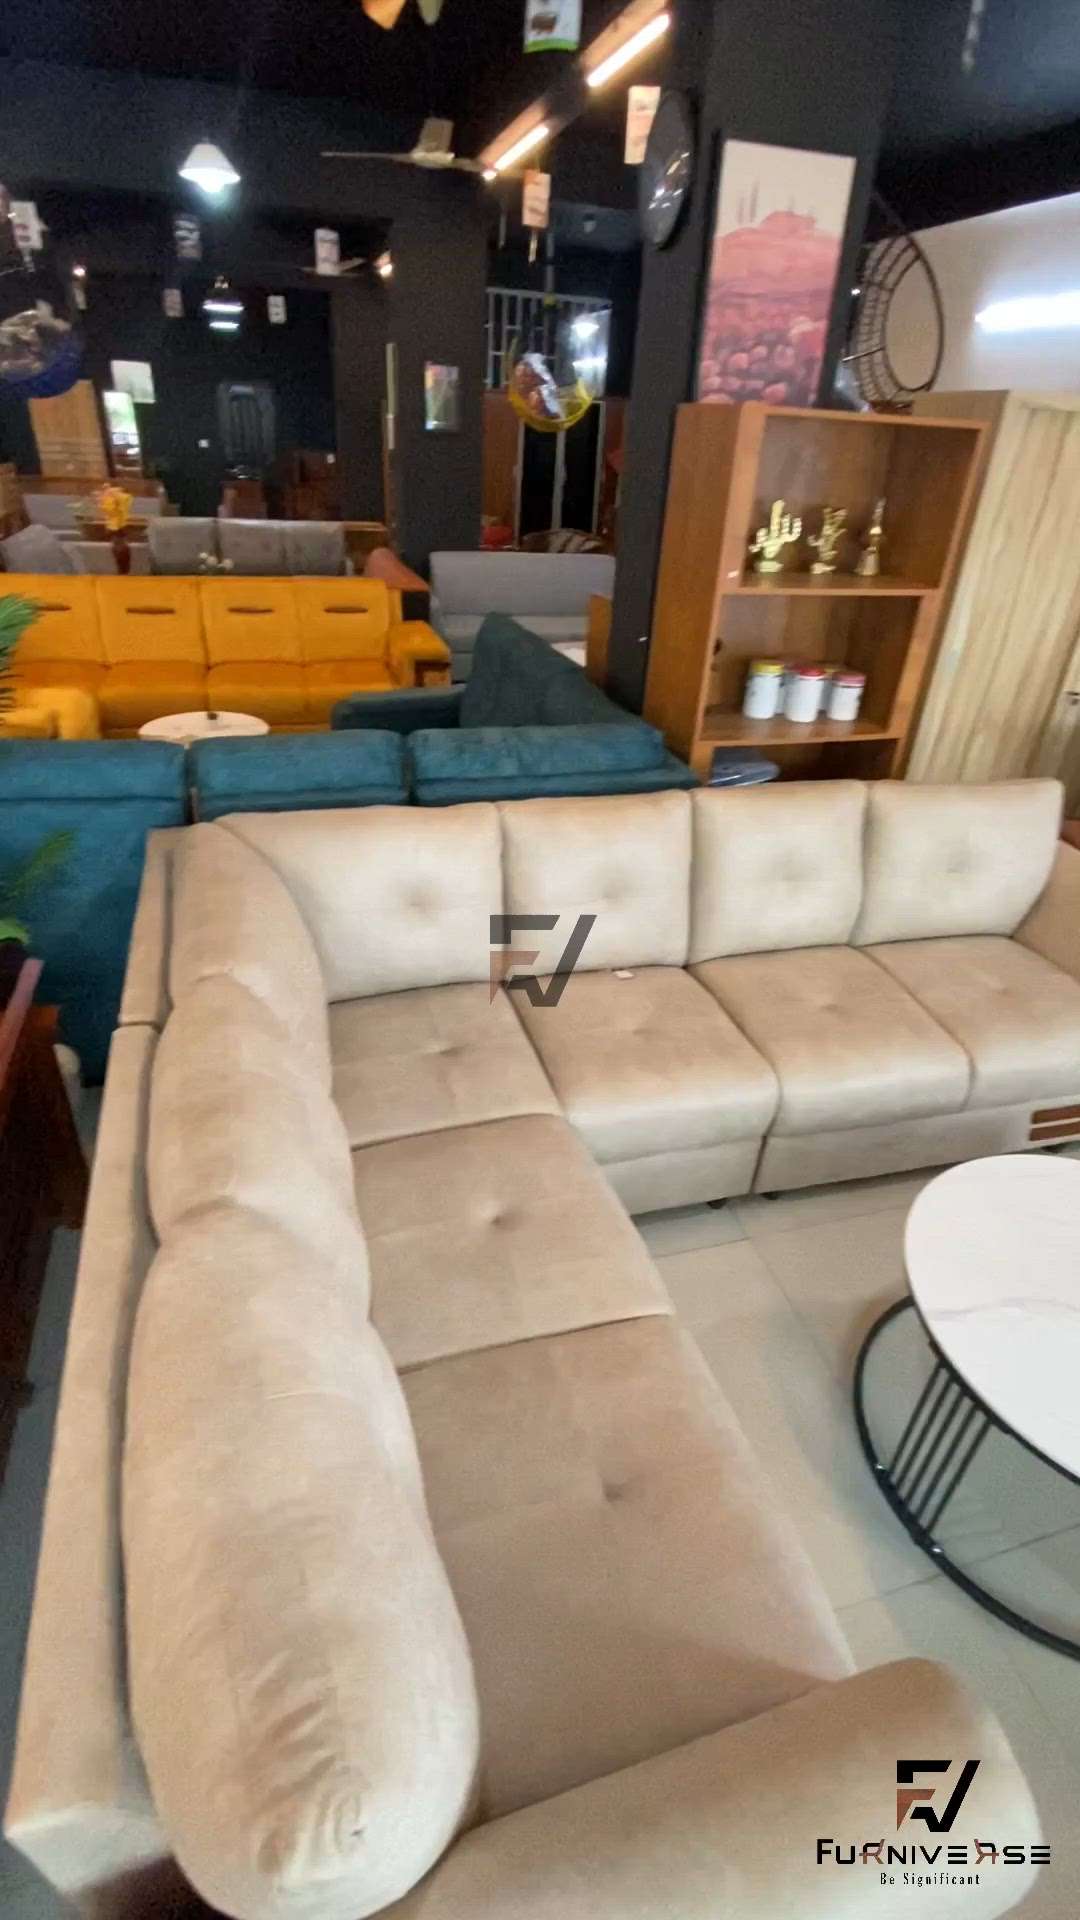 Full cover sofa collections
7594913218
.
.
 #Furnishings  #furniture   #sofaset  #Palakkad  #kerala